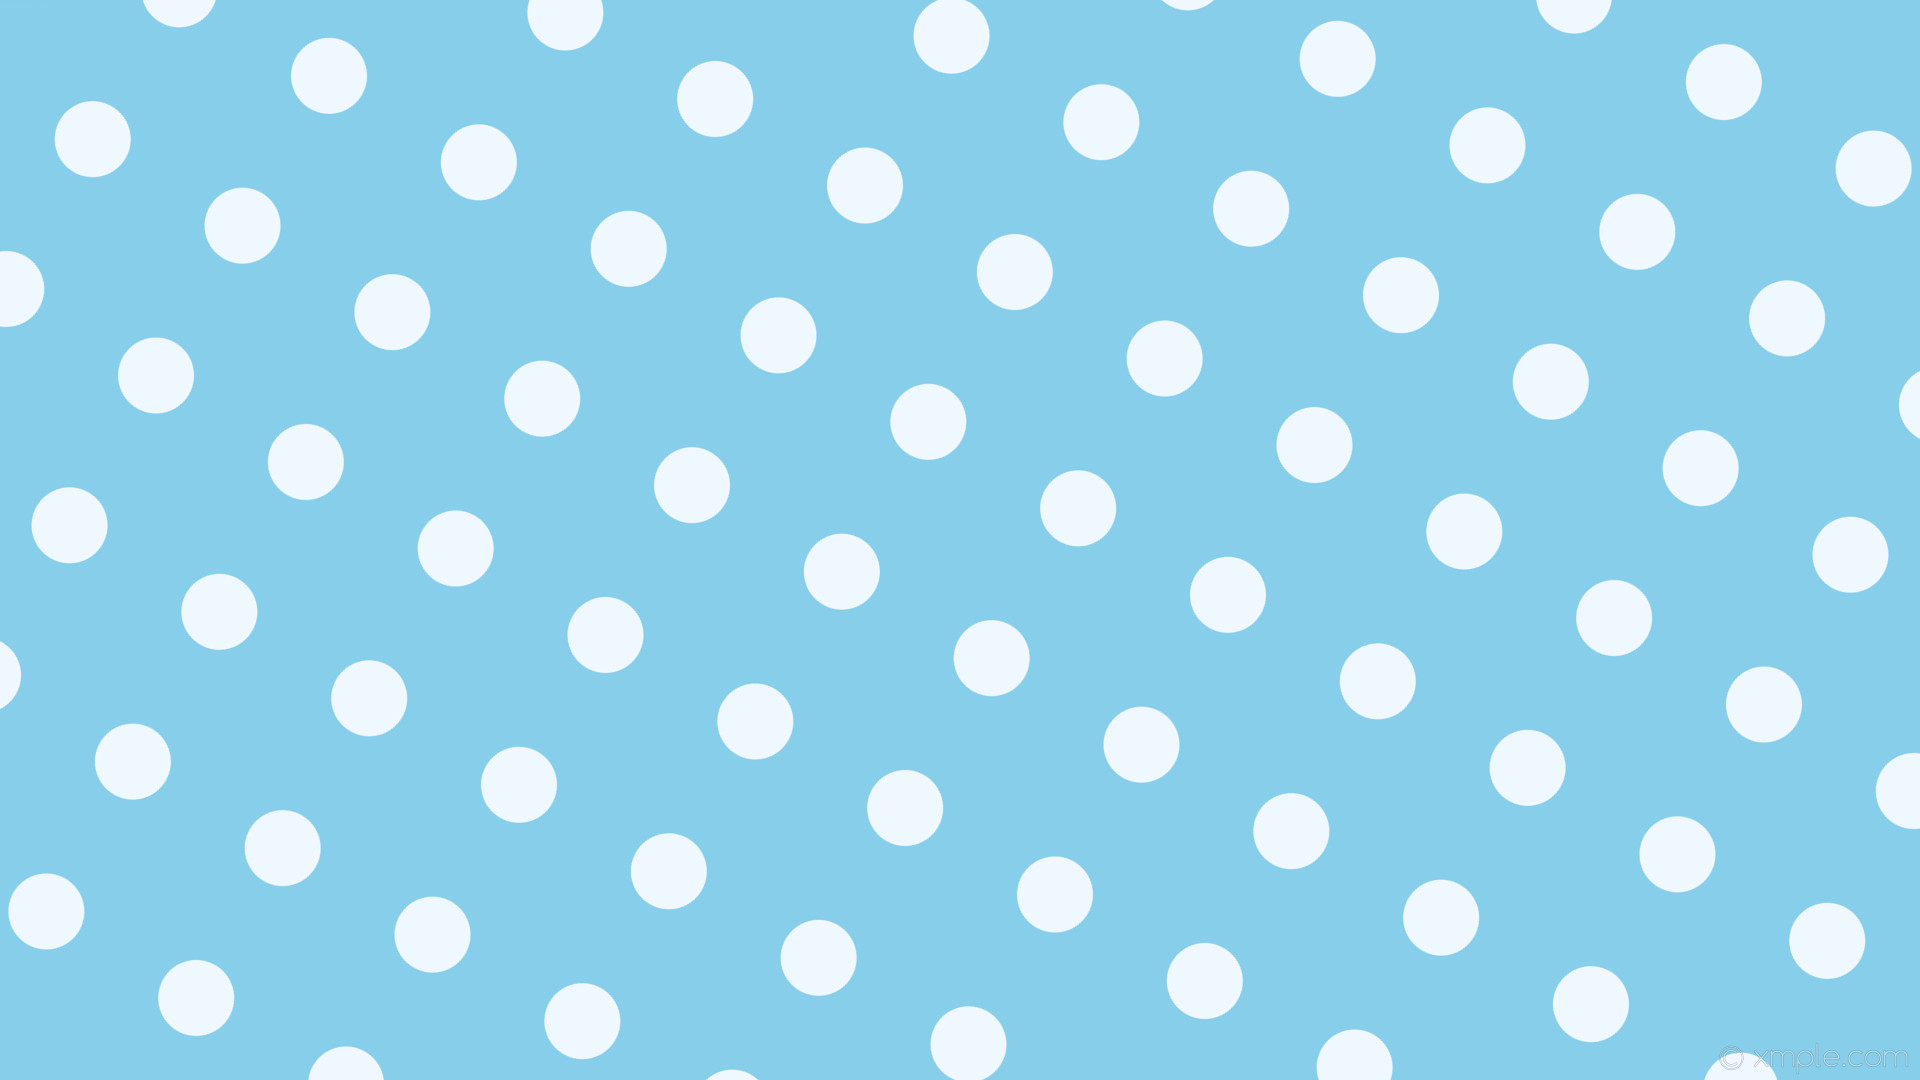 1920x1080 wallpaper dots spots white blue polka sky blue alice blue #87ceeb #f0f8ff  150Â°